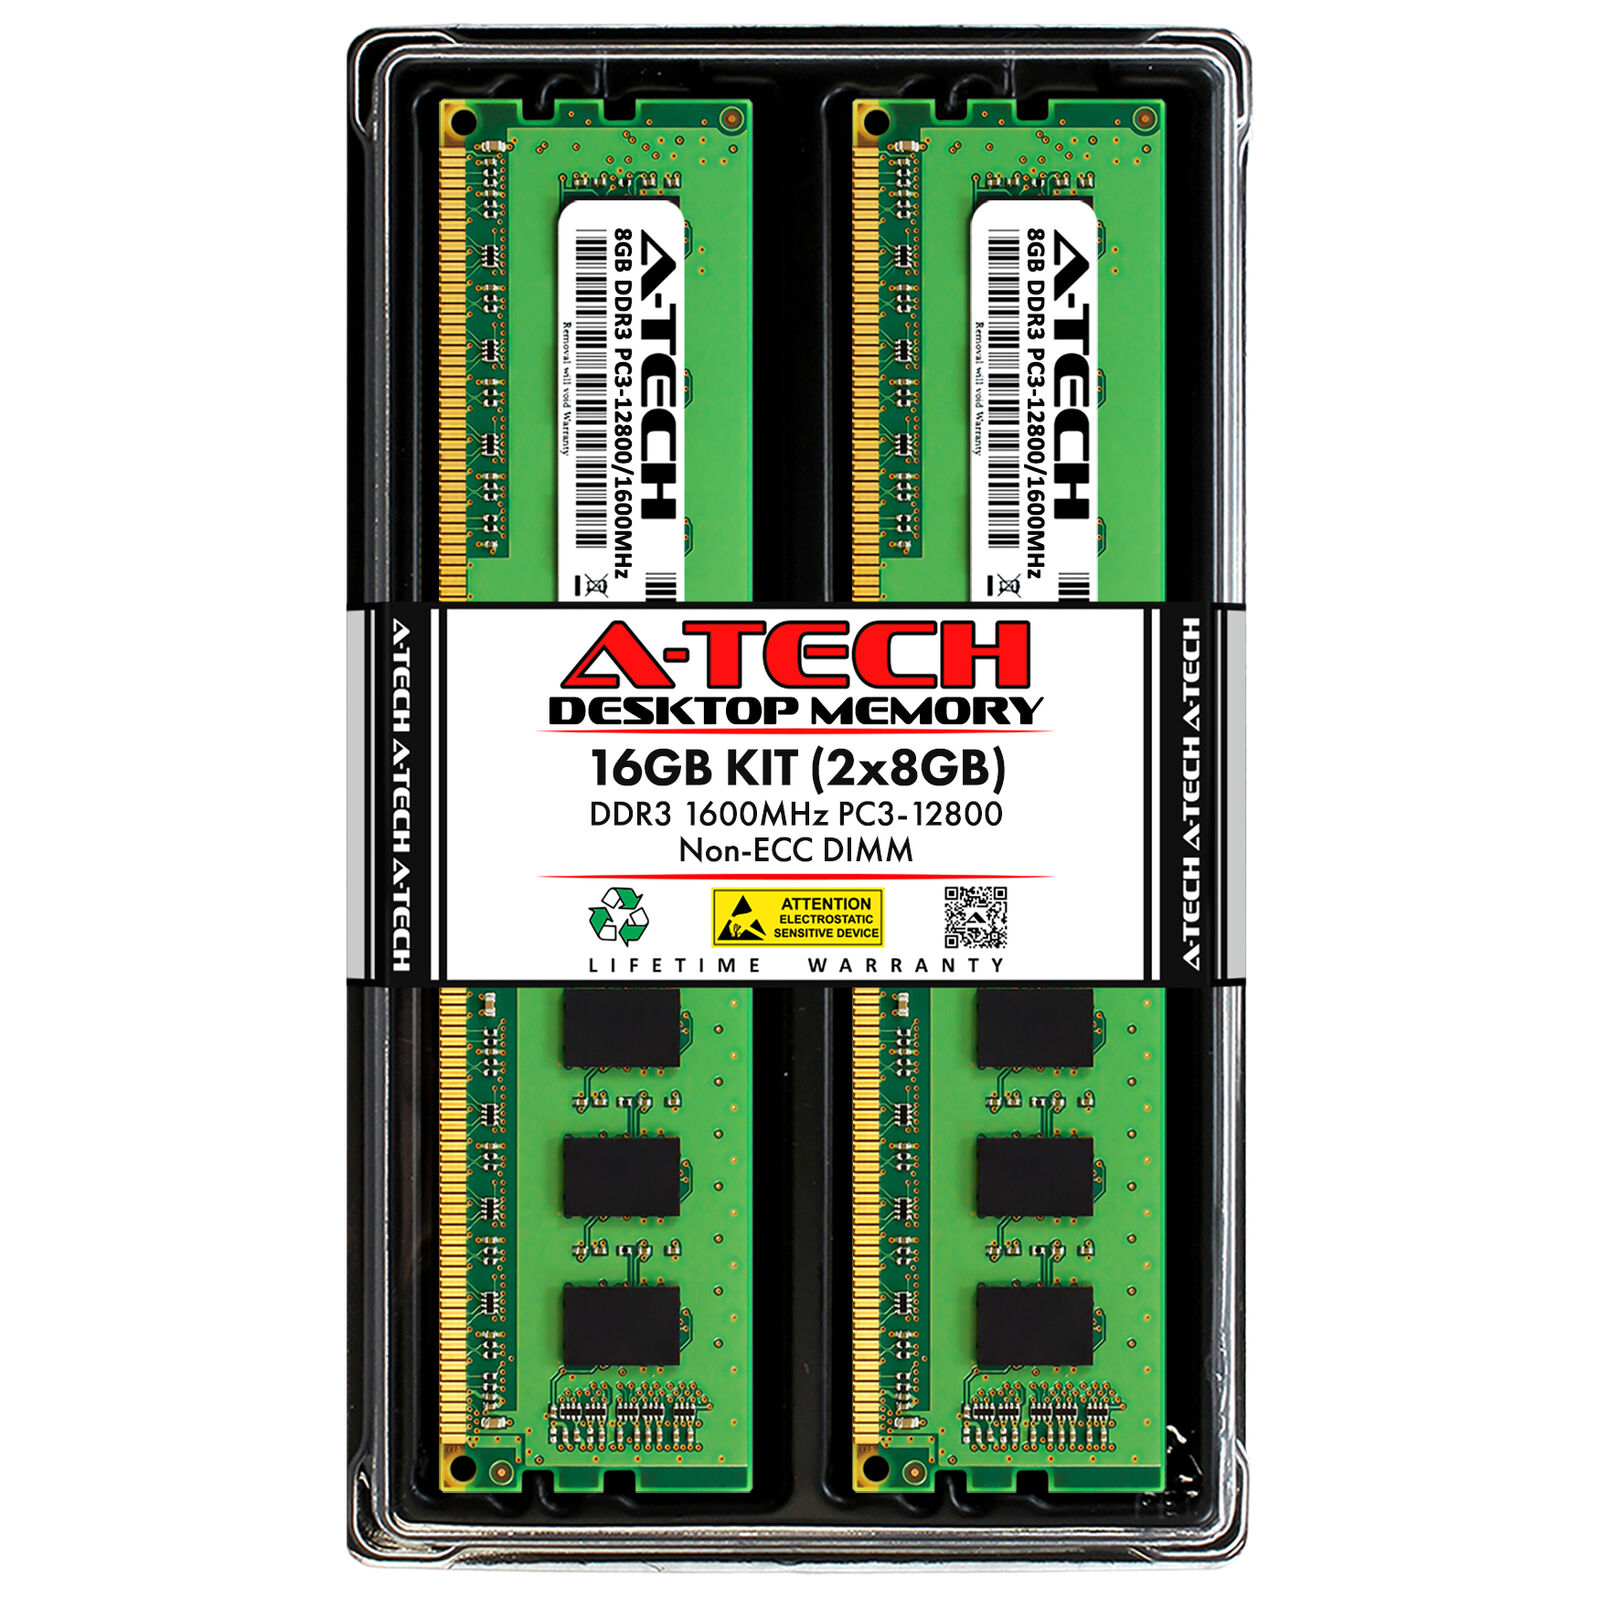 16GB KIT 2 x 8GB DIMM DDR3 NON-ECC PC3-12800 1600MHz 1600 DESKTOP Ram Memory